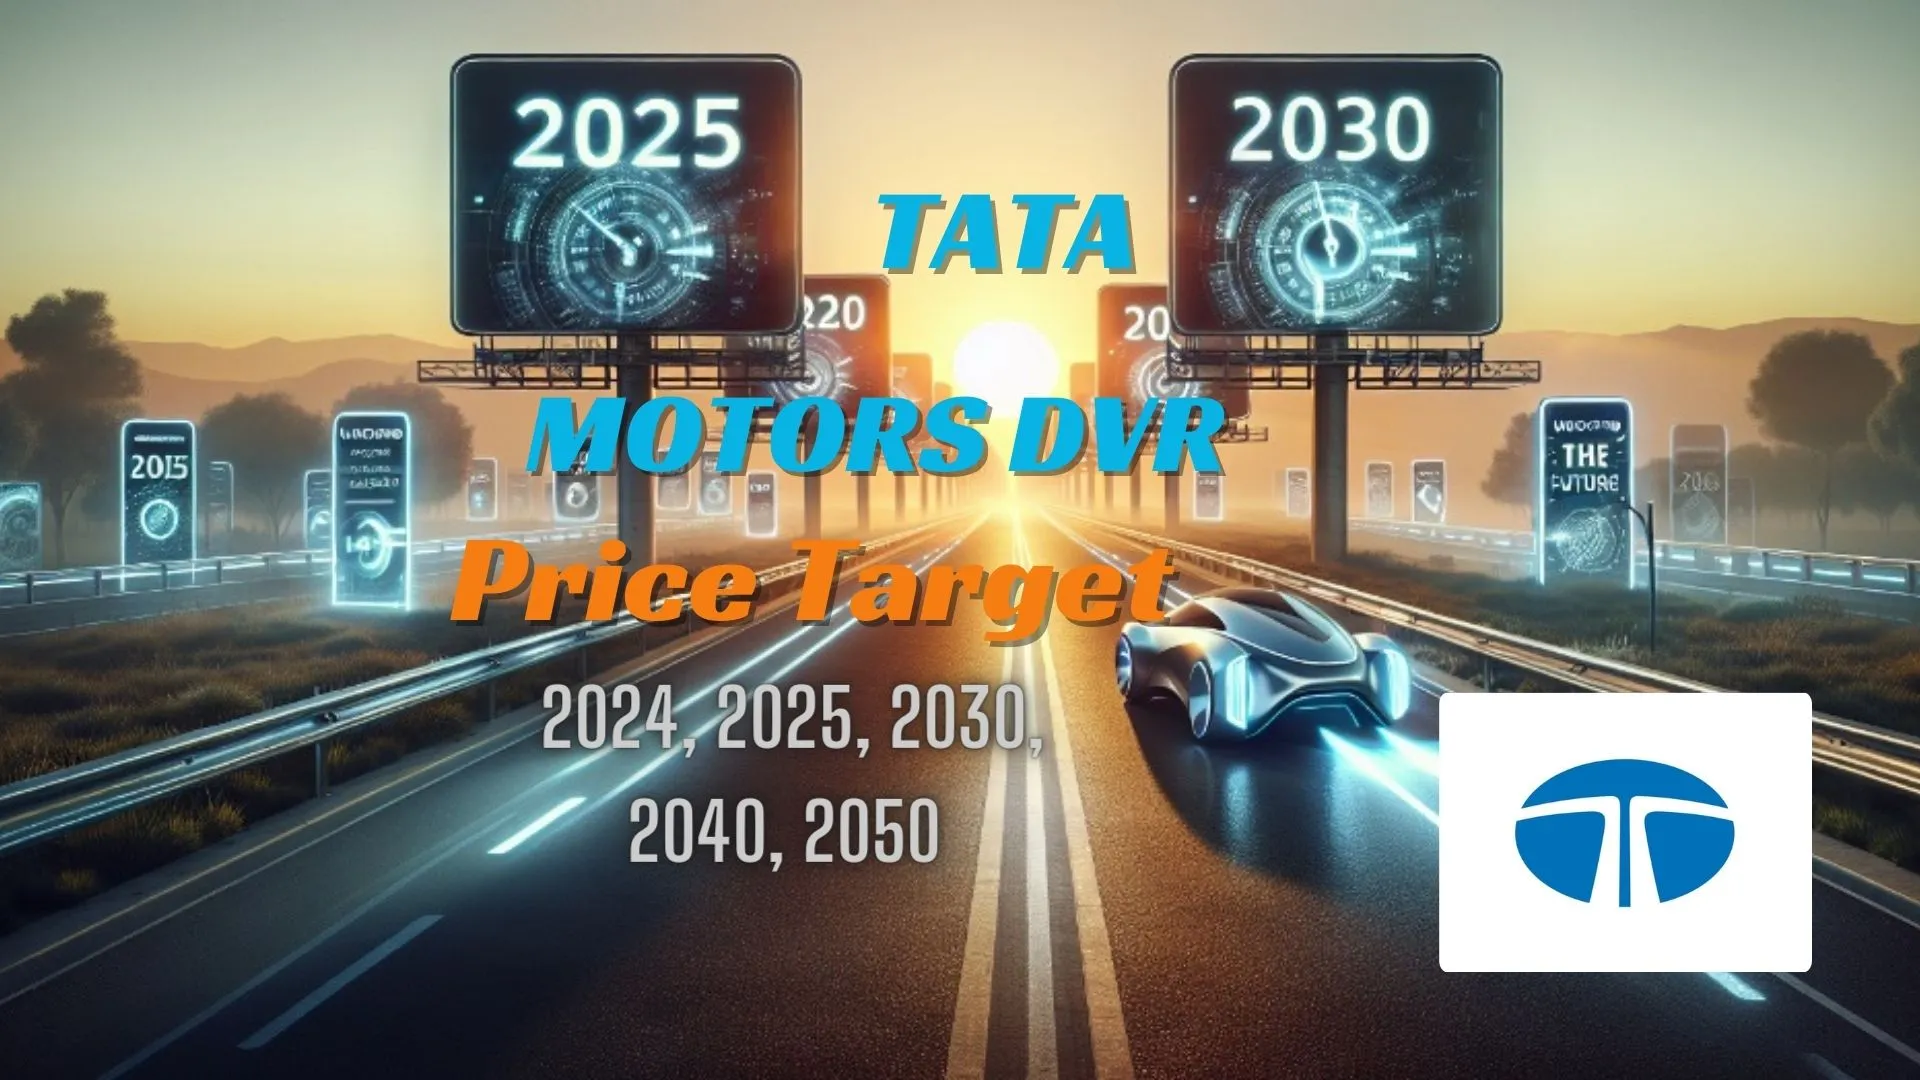 tata motors dvr share price target